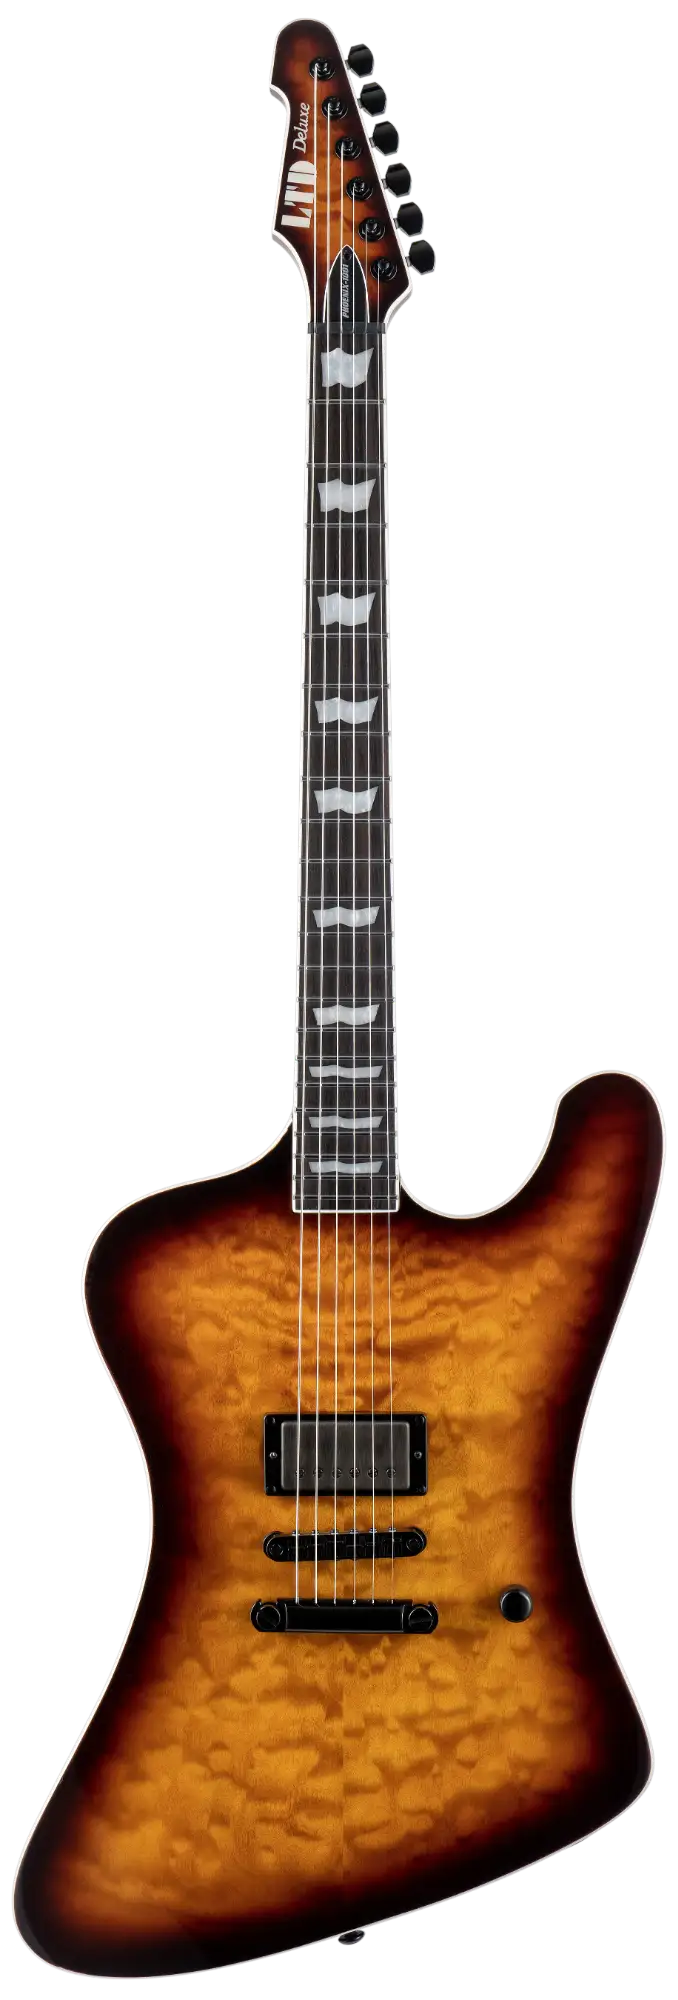 ESP DELUXE PHOENIX-1001 Electric Guitar (Tobacco Sunburst)